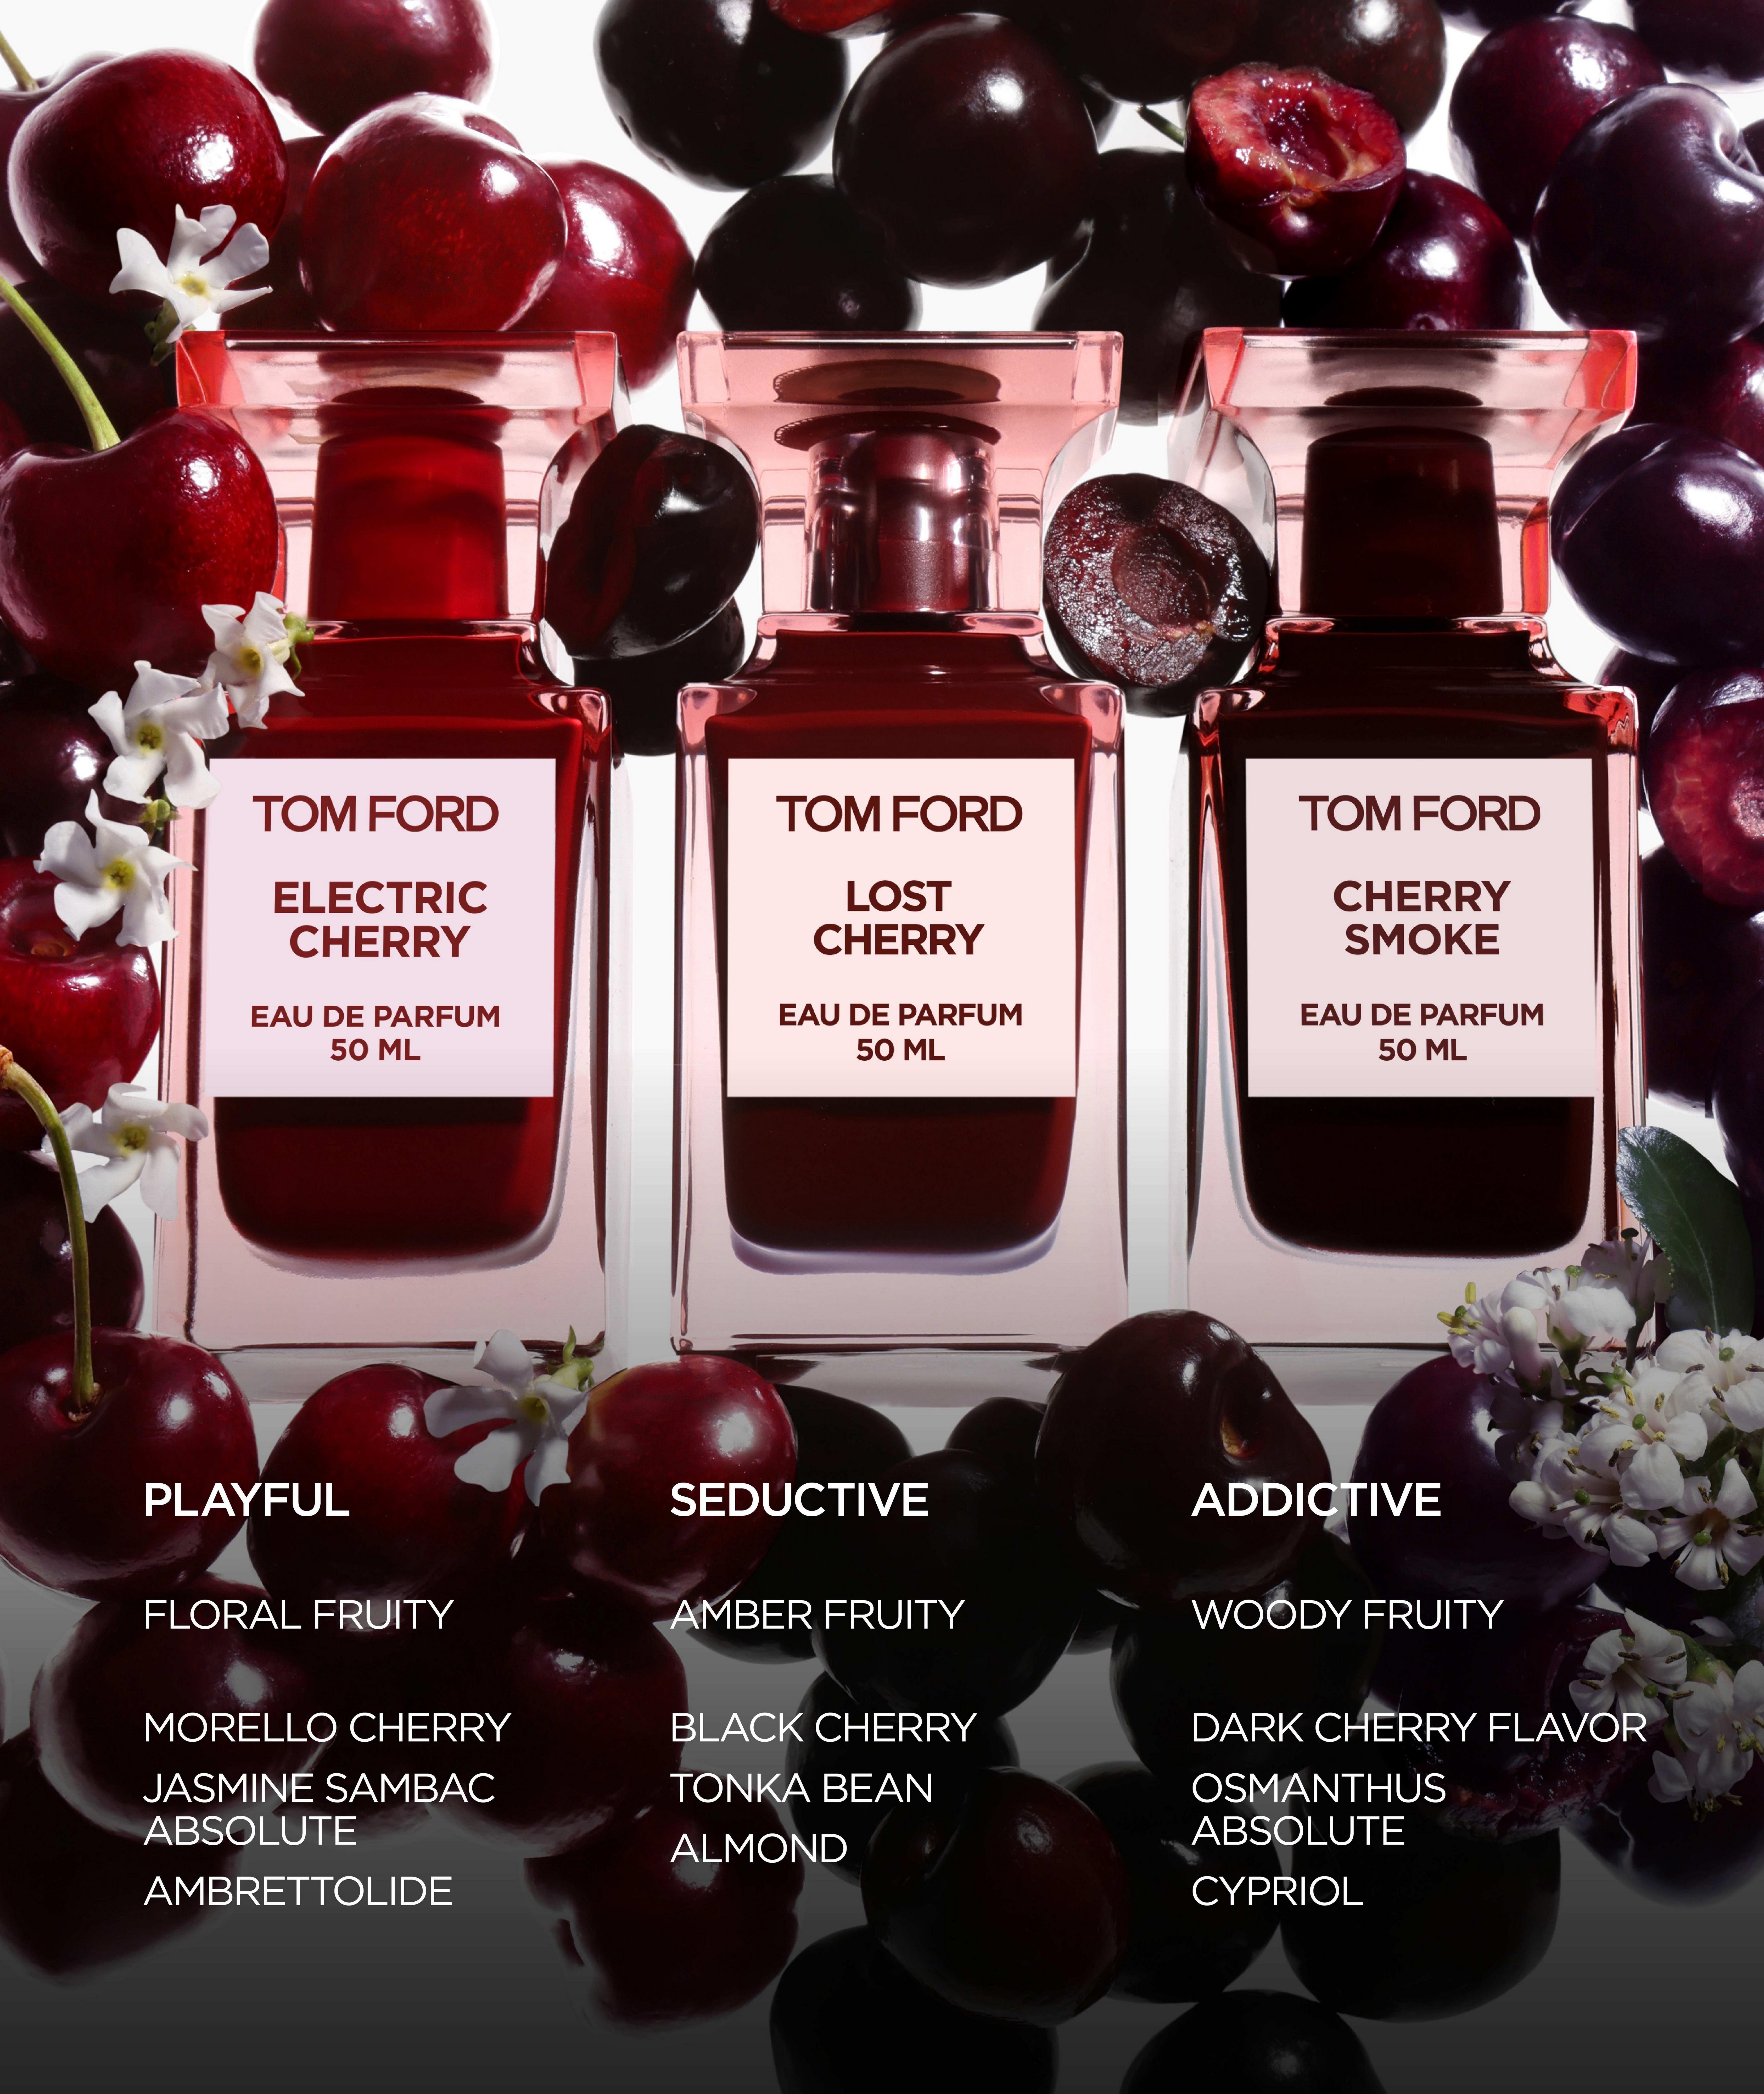 TOM FORD Lost Cherry Eau De Parfum 30ml | Fragrance | Harry Rosen